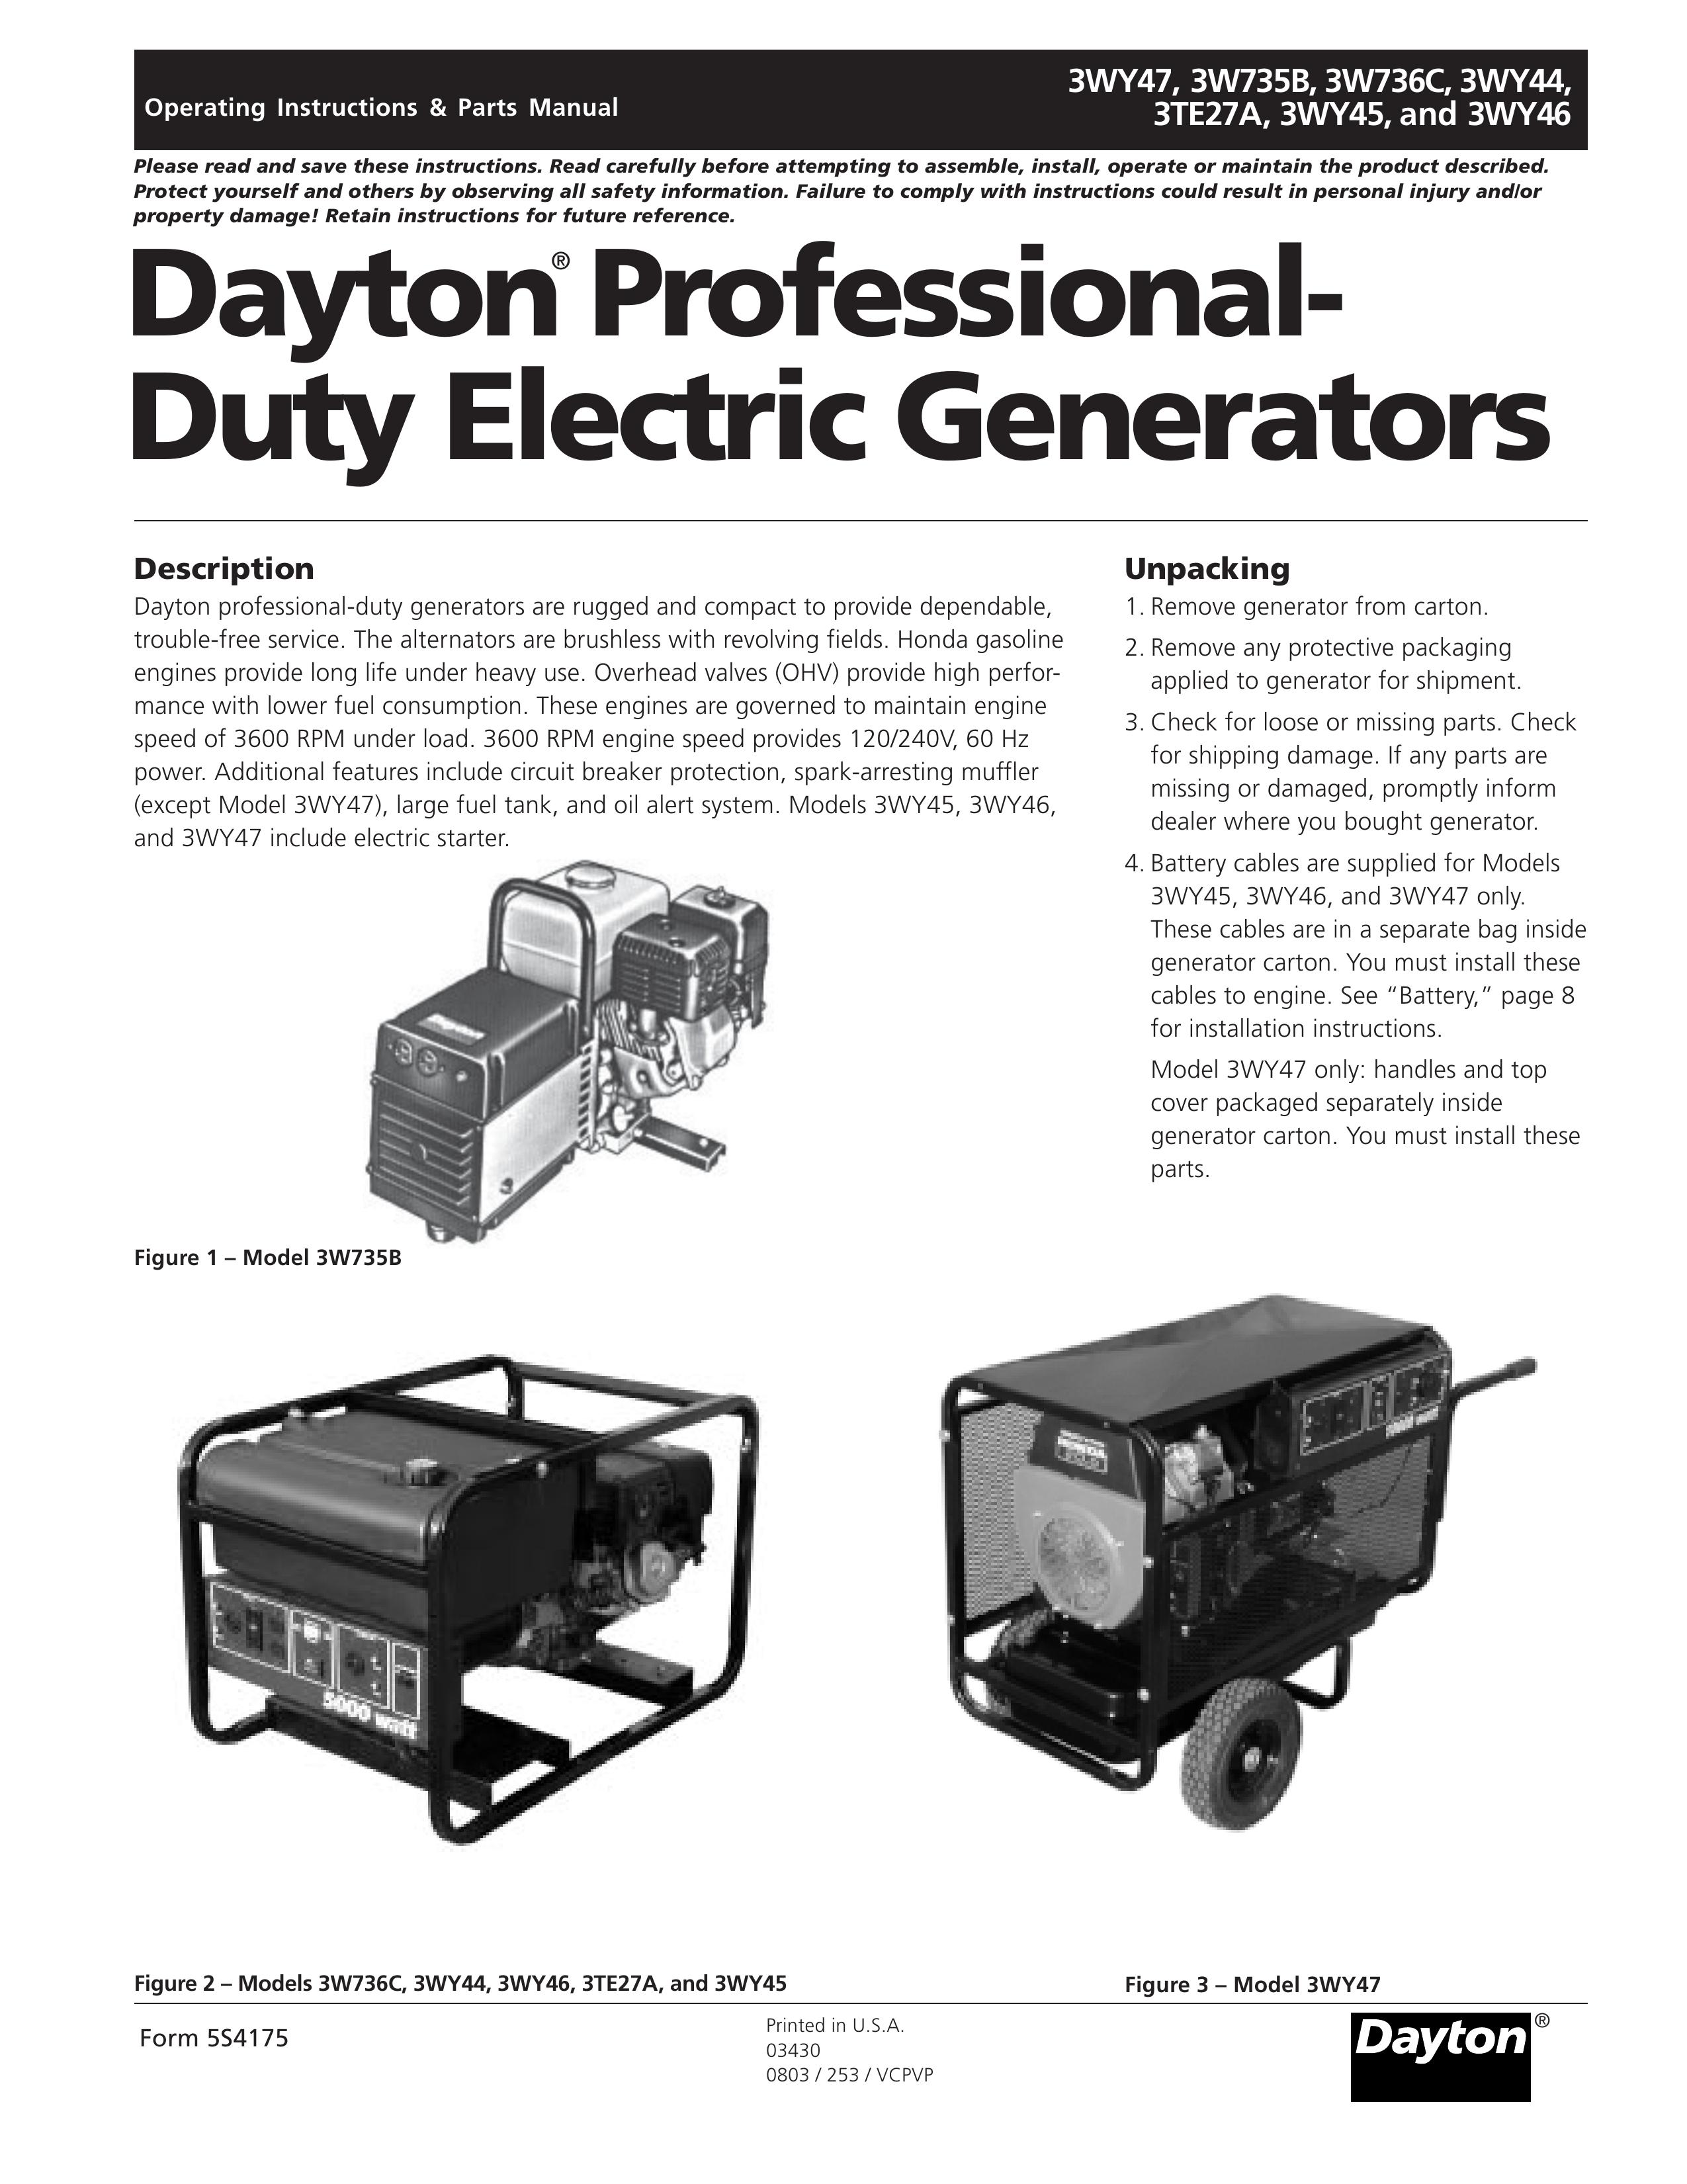 Dayton 3WY46 Portable Generator User Manual